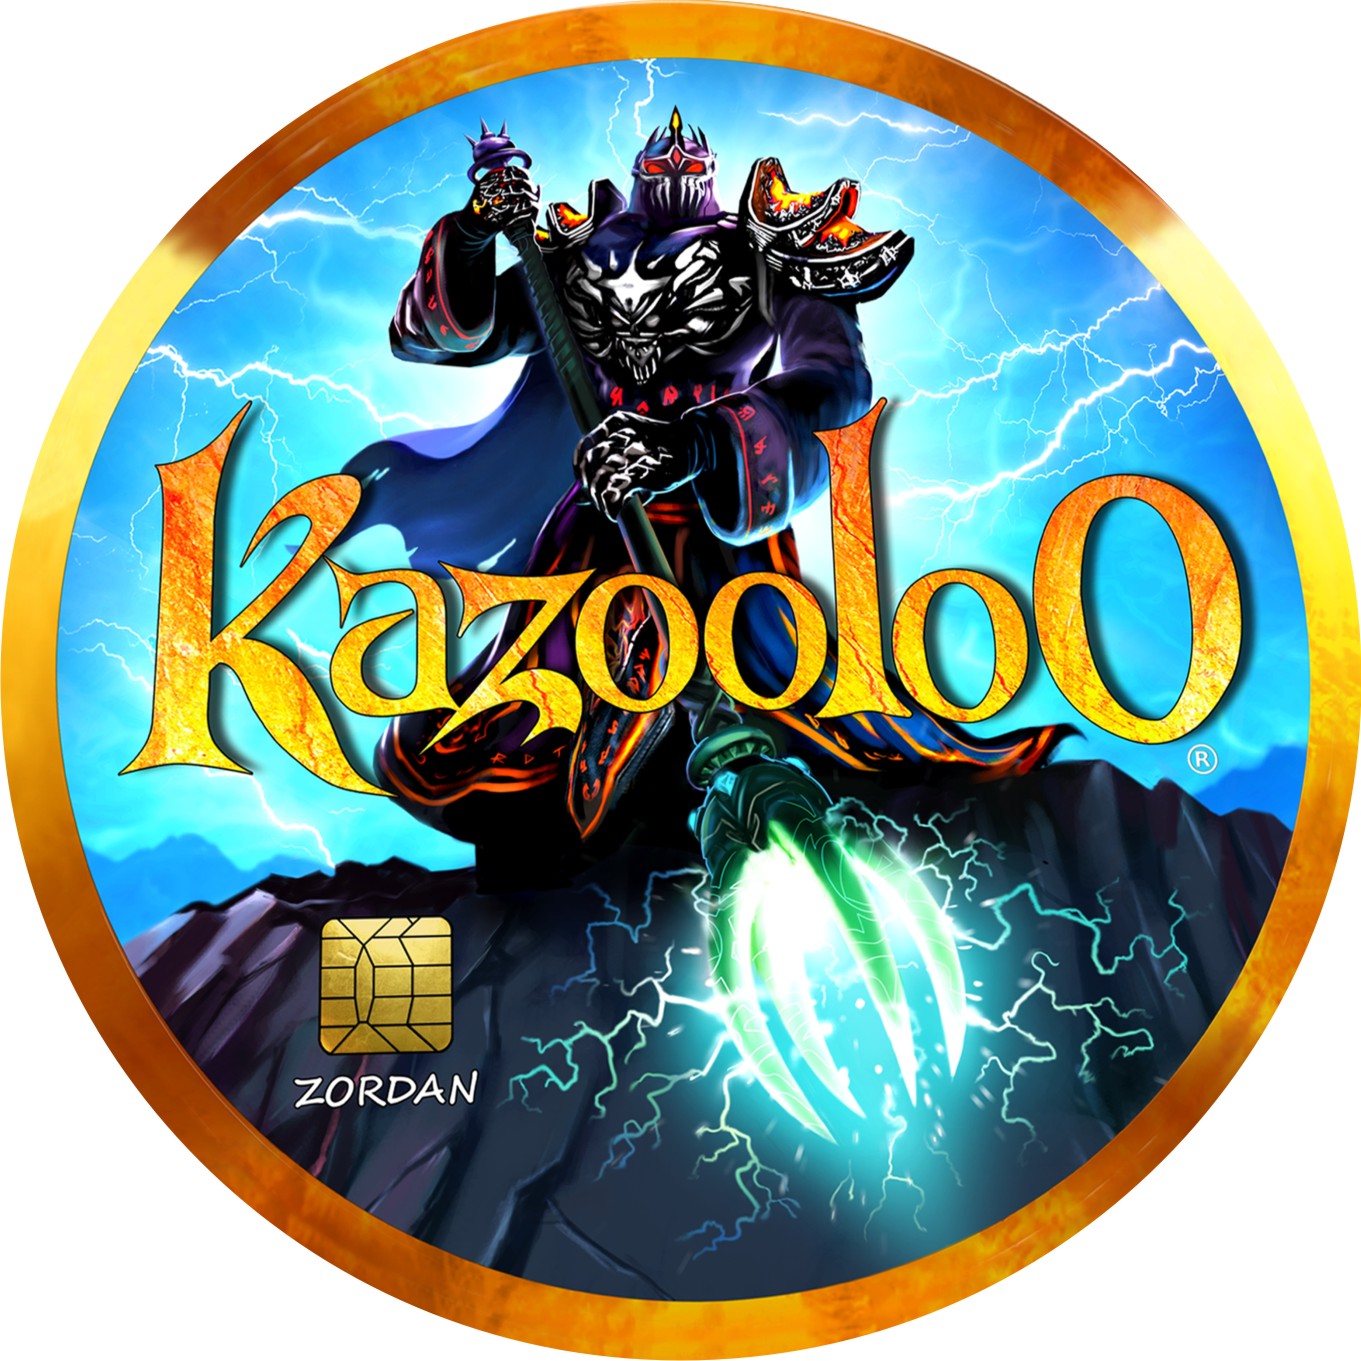 Augmented Reality game Kazooloo